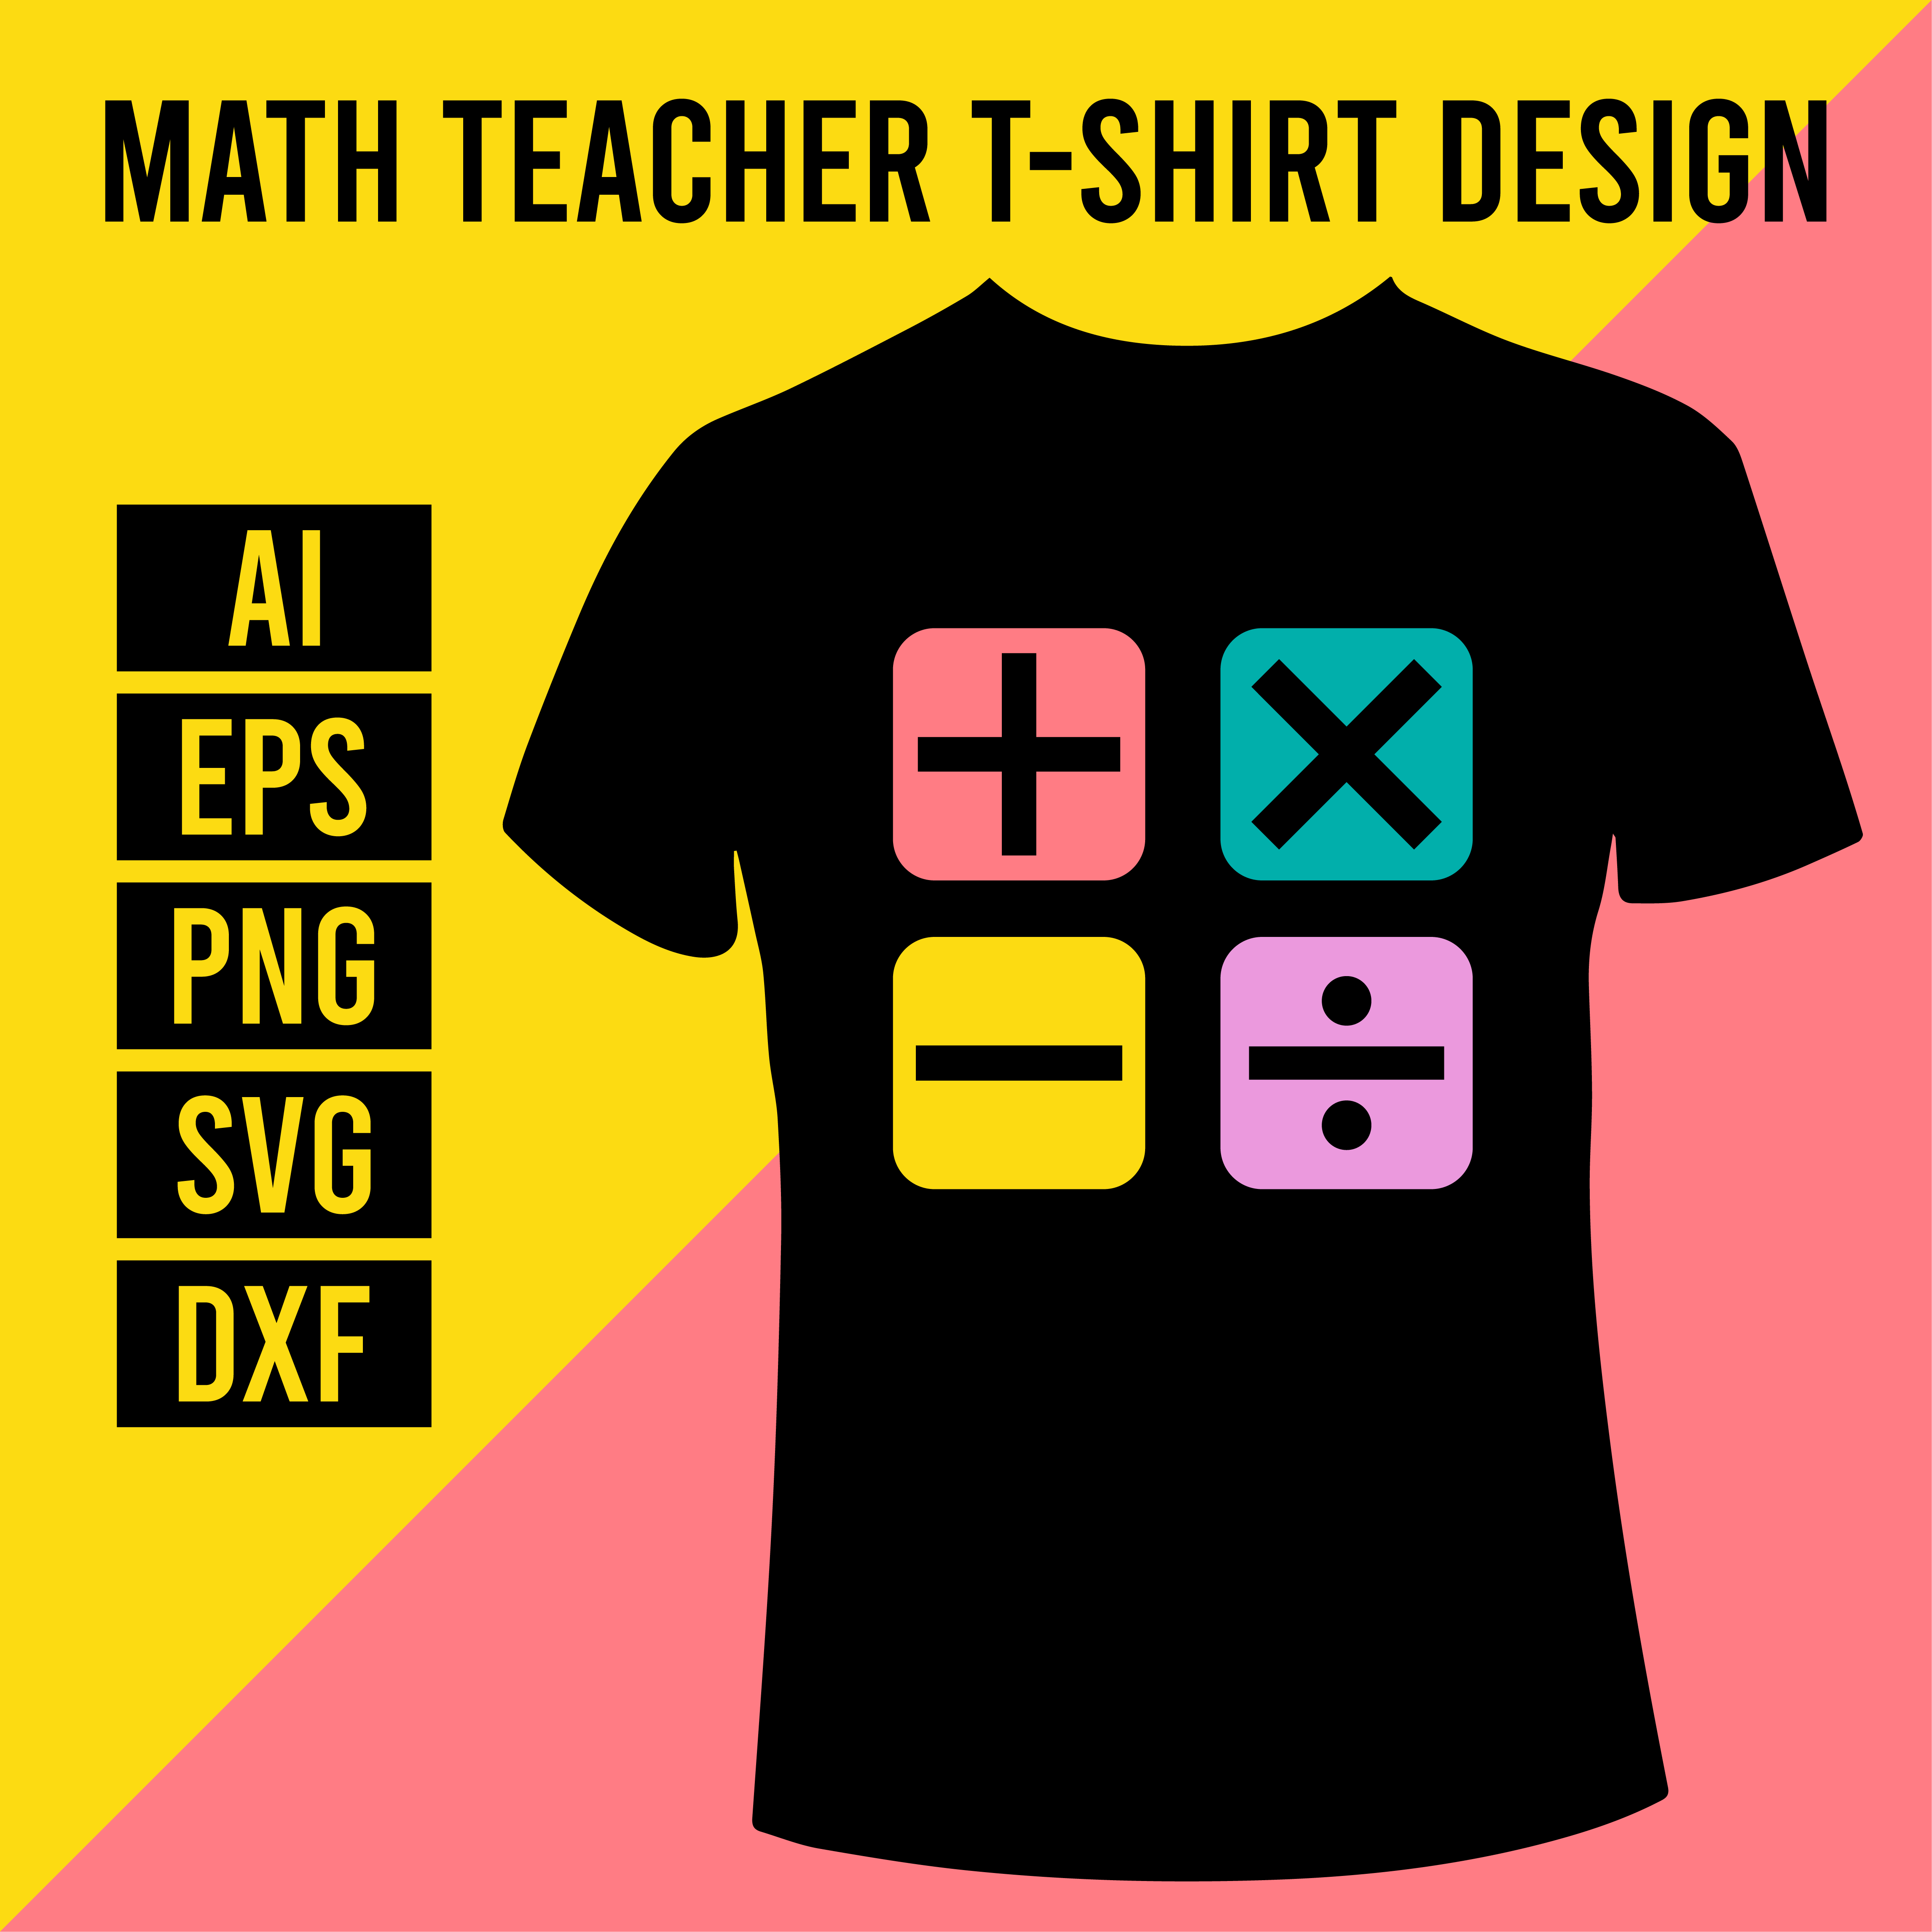 Math Teacher T-Shirt Design main cover file.